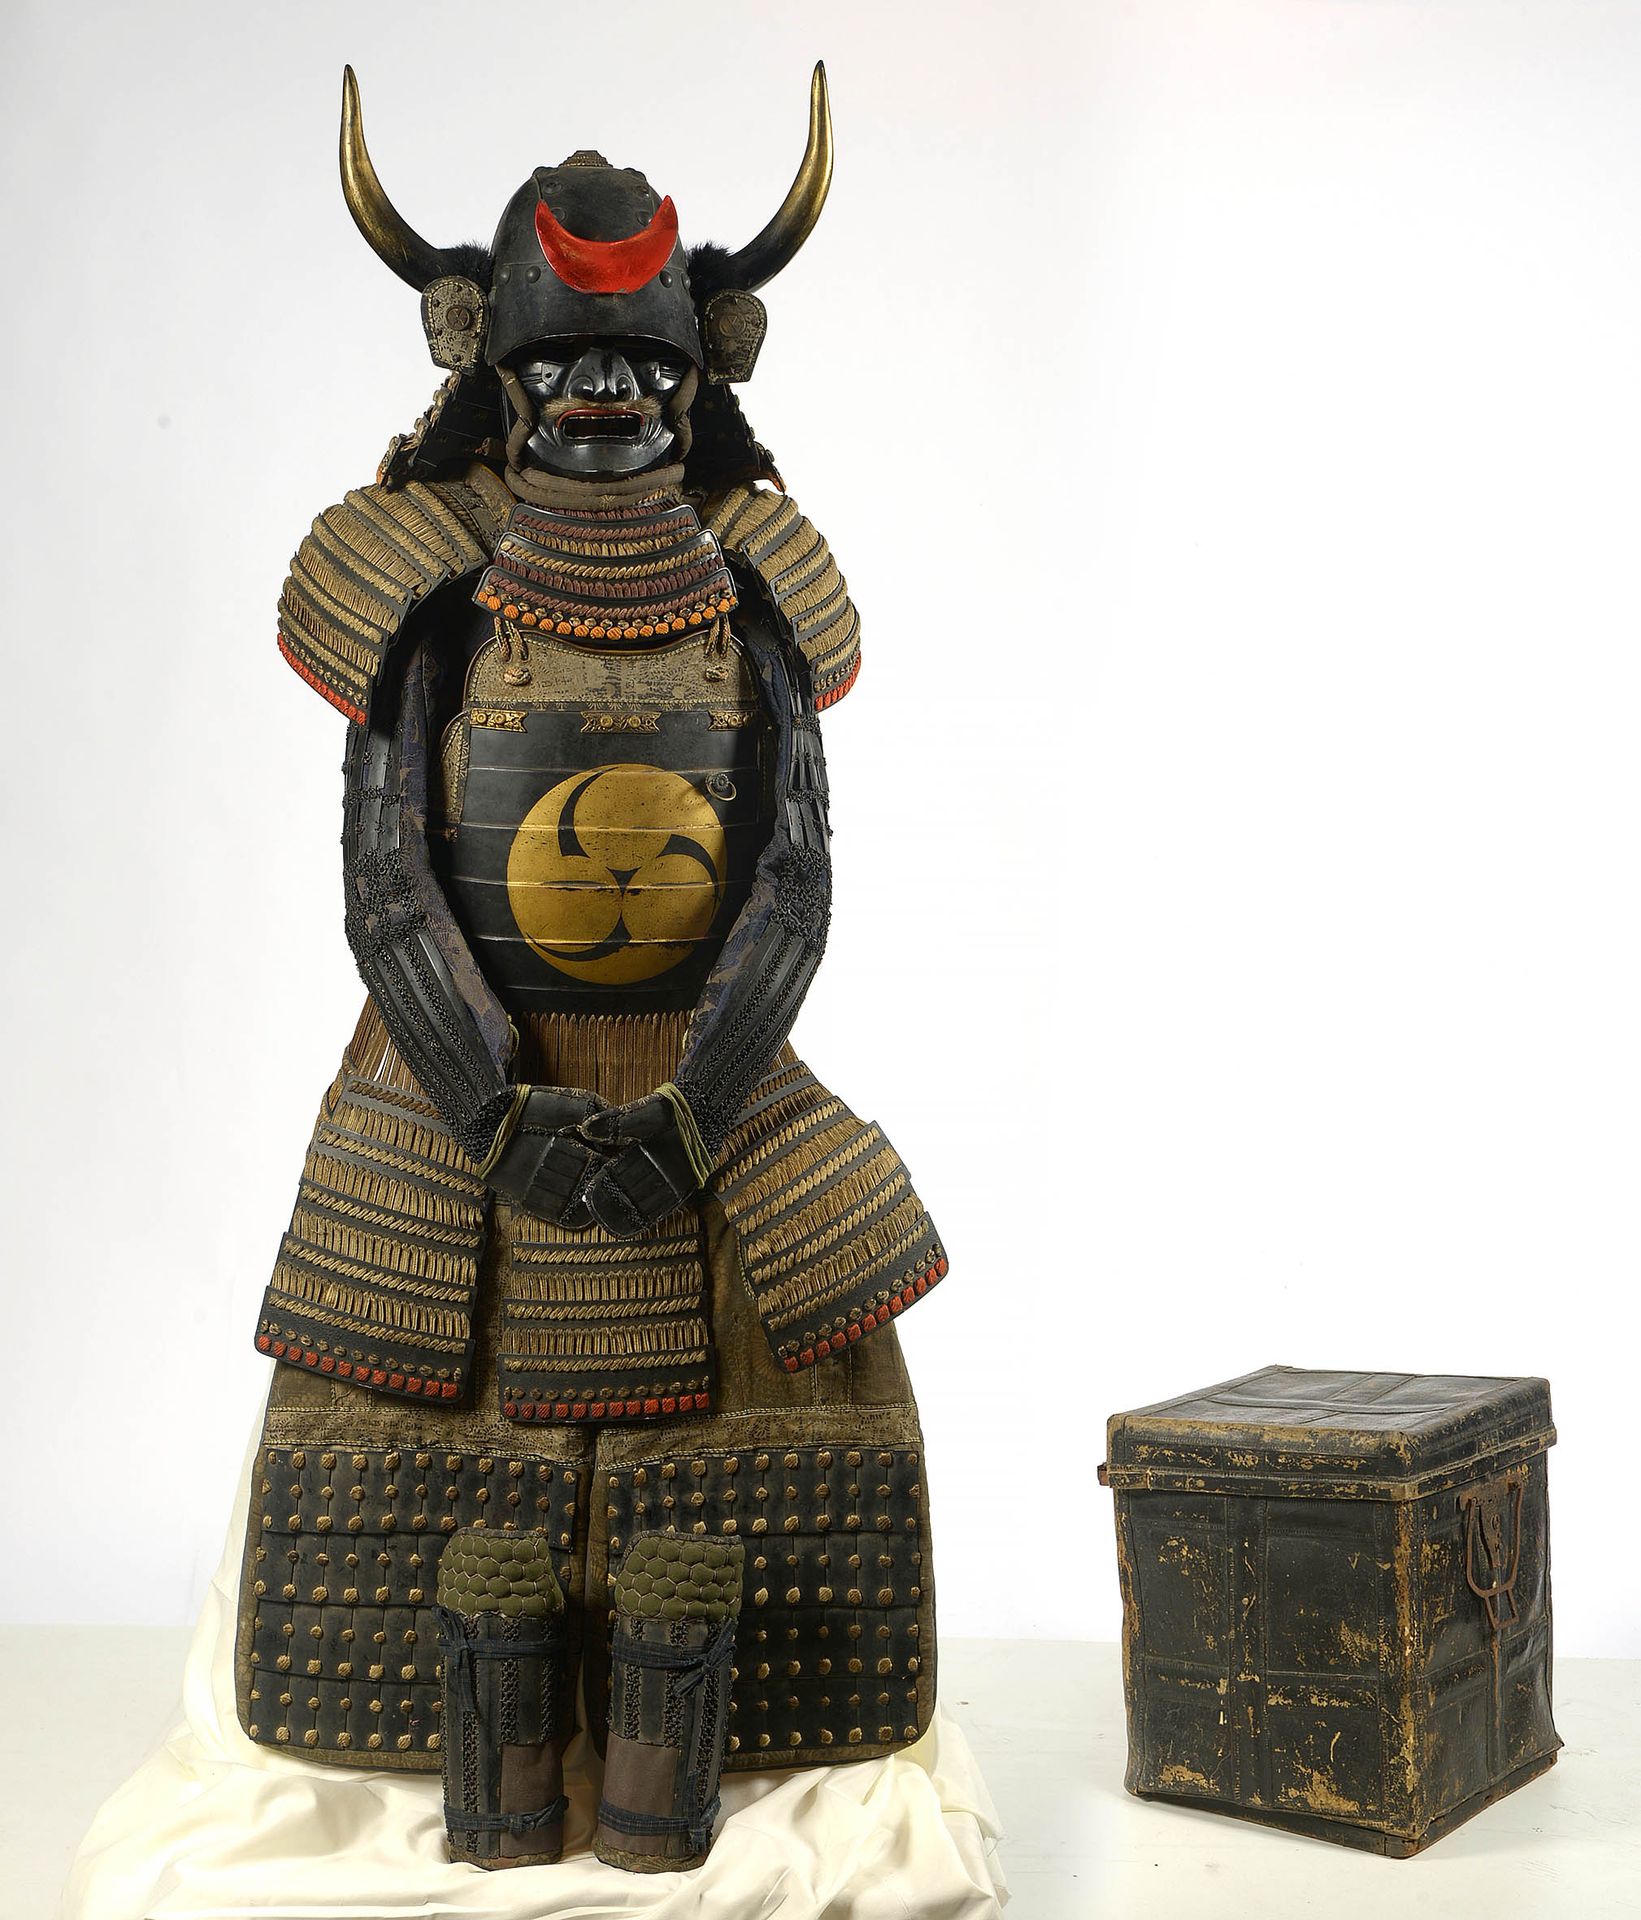 Null 冲绳尼迈道的 "铁乌石-努里"_x000D_武士盔甲，全套。

Dô okegawa "盔甲是由水平排列的铁片通过铆钉和系带组装而成，整体上漆，并配有&hellip;